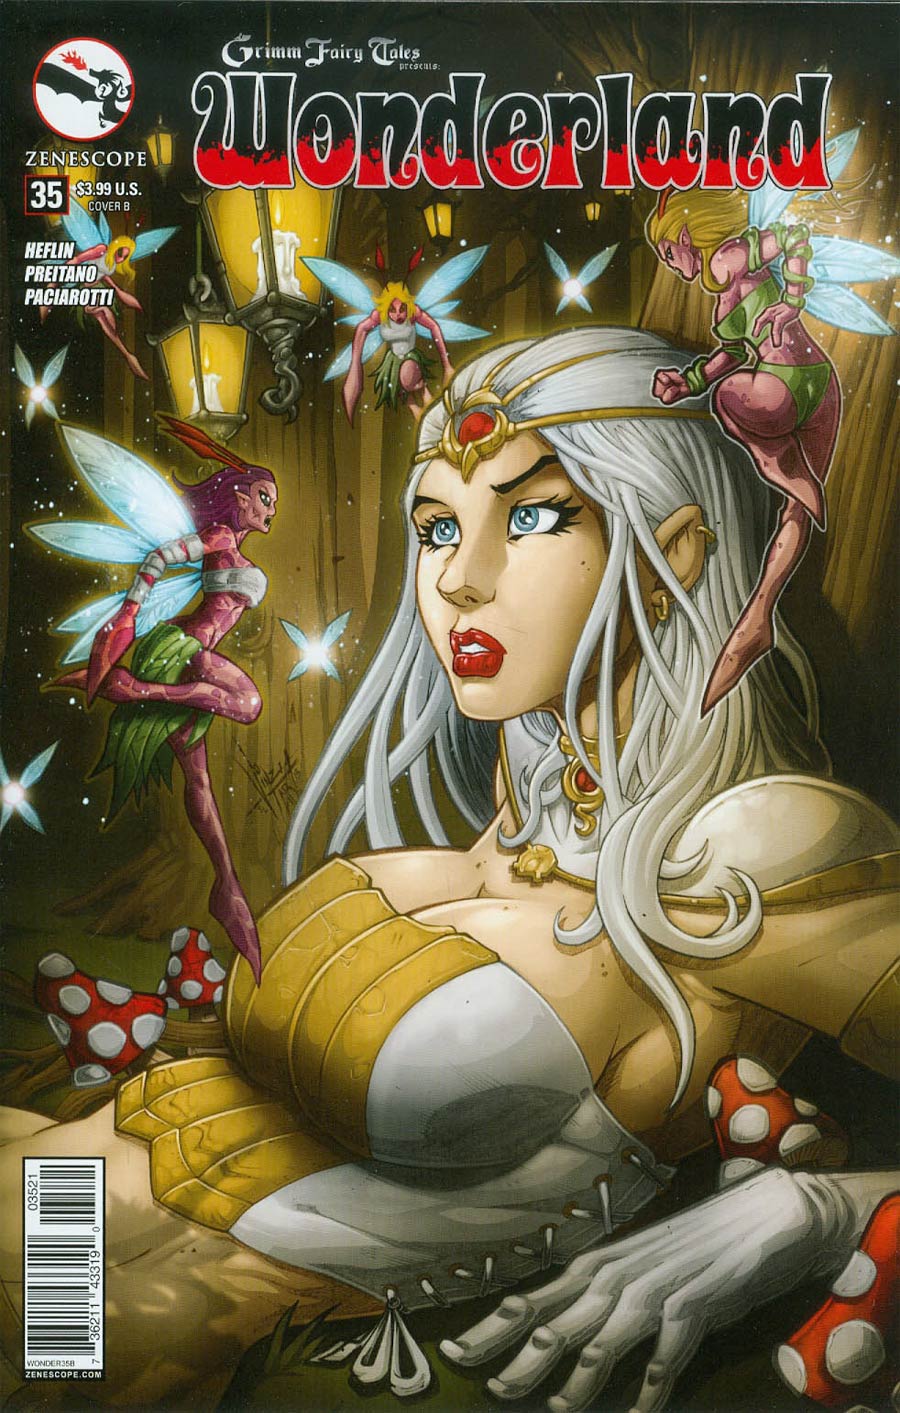 Grimm Fairy Tales Presents Wonderland Vol 2 #35 Cover B Vinz El Tabanas